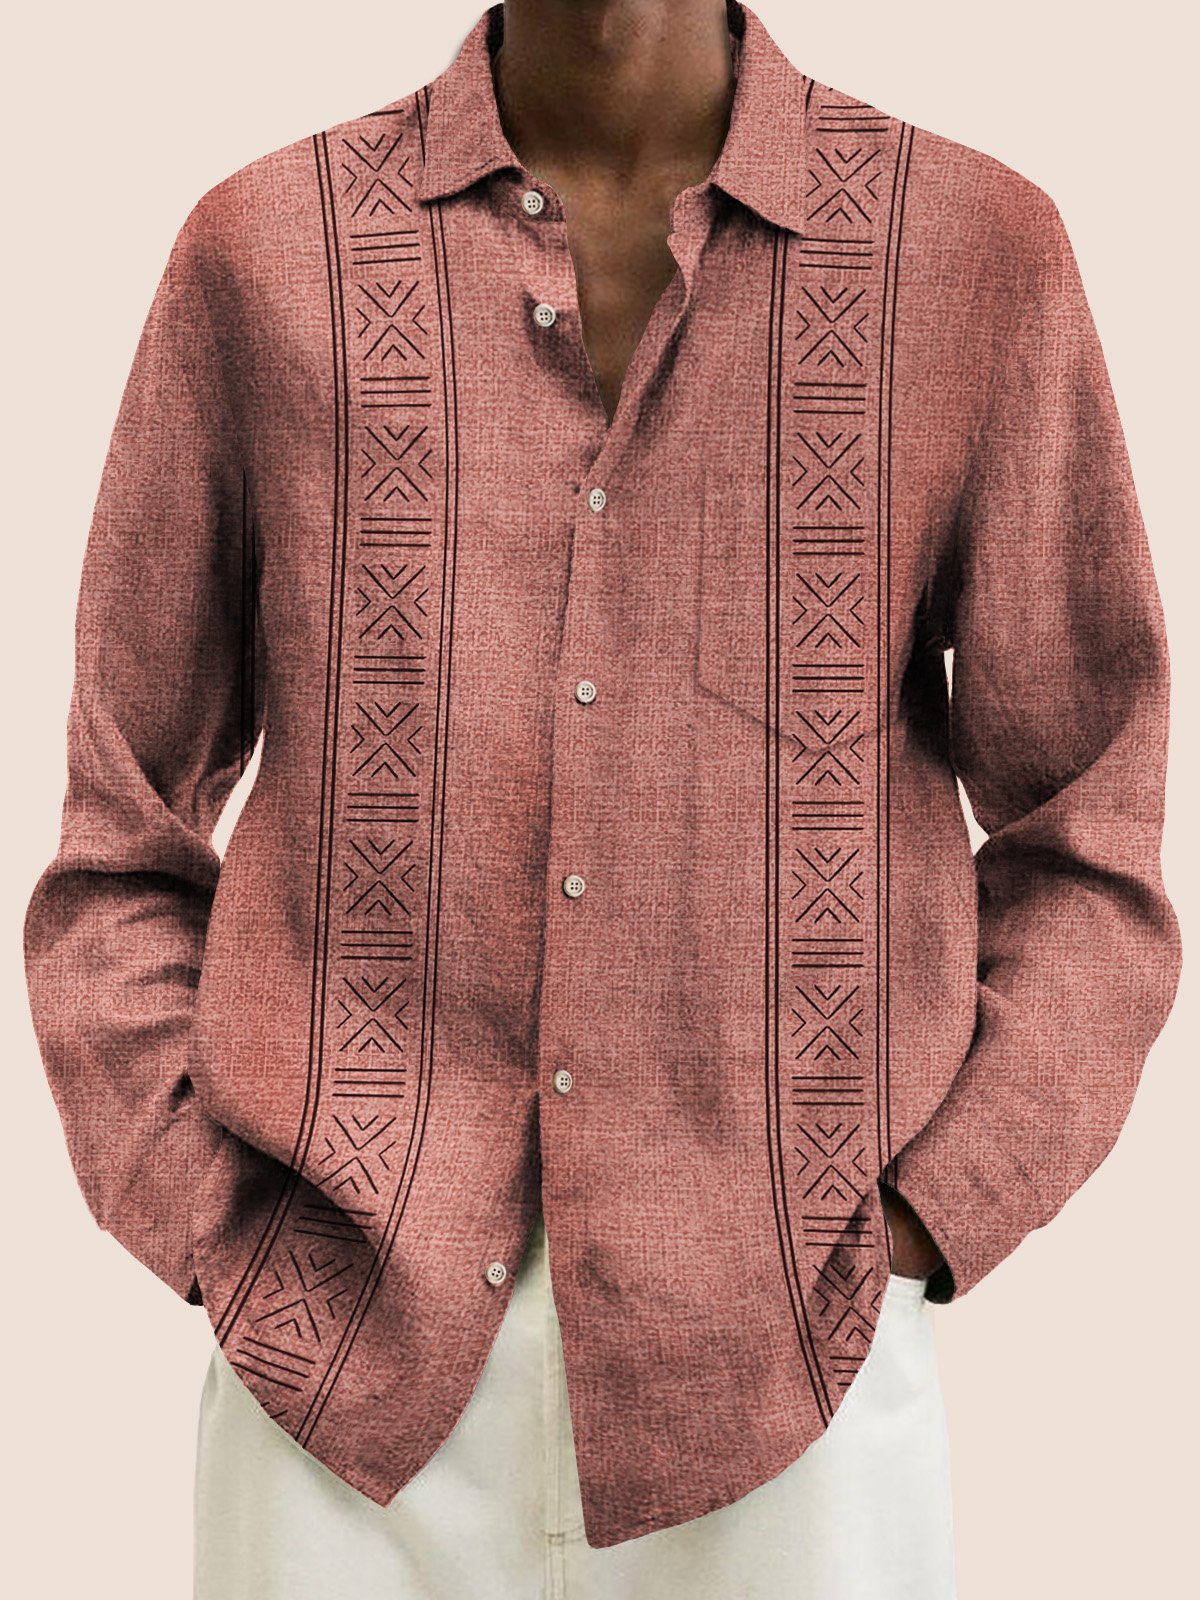 Royaura Vintage Aztec Red Men's Guayabera Shirts Stretch Geometric Art Aloha Ethnic Totem Plus Size Pocket Button Camp Shirts